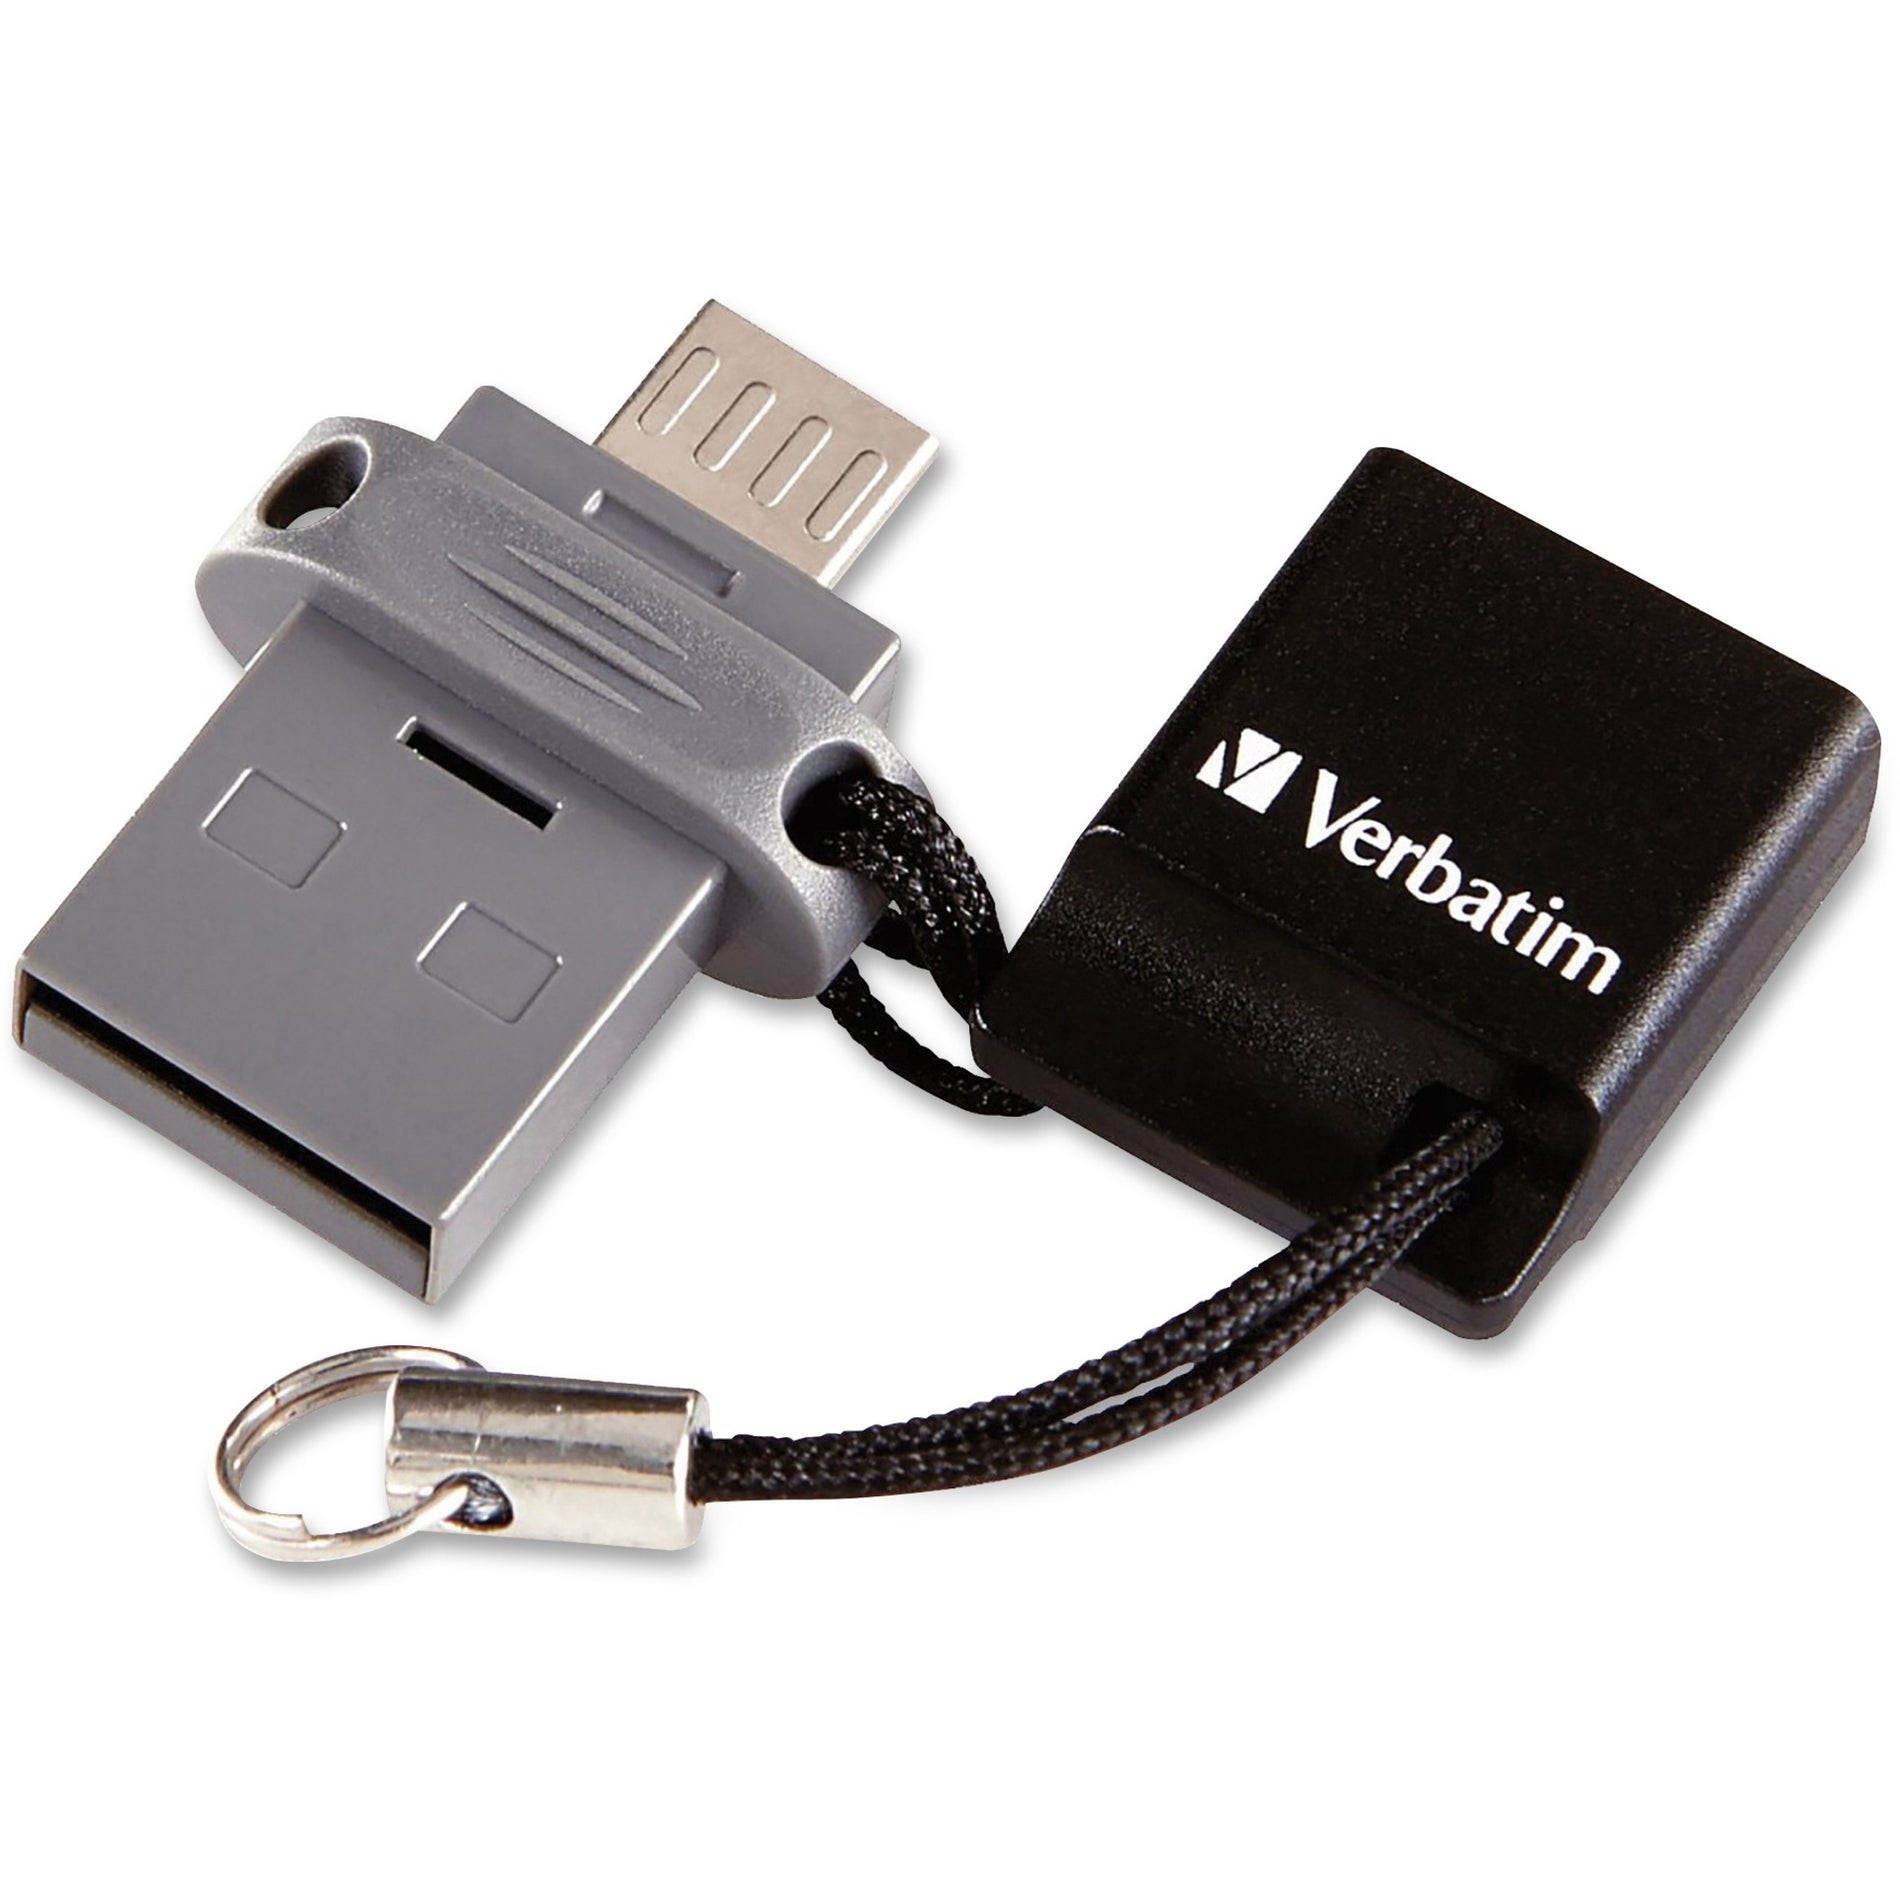 Verbatim 99140 Store 'n' Go Dual USB Flash Drive 64GB Black/Gray Verbatim (ベルバチム) 99140 ストア 'n' ゴーデュアル USB フラッシュドライブ、64GB、ブラック/グレー